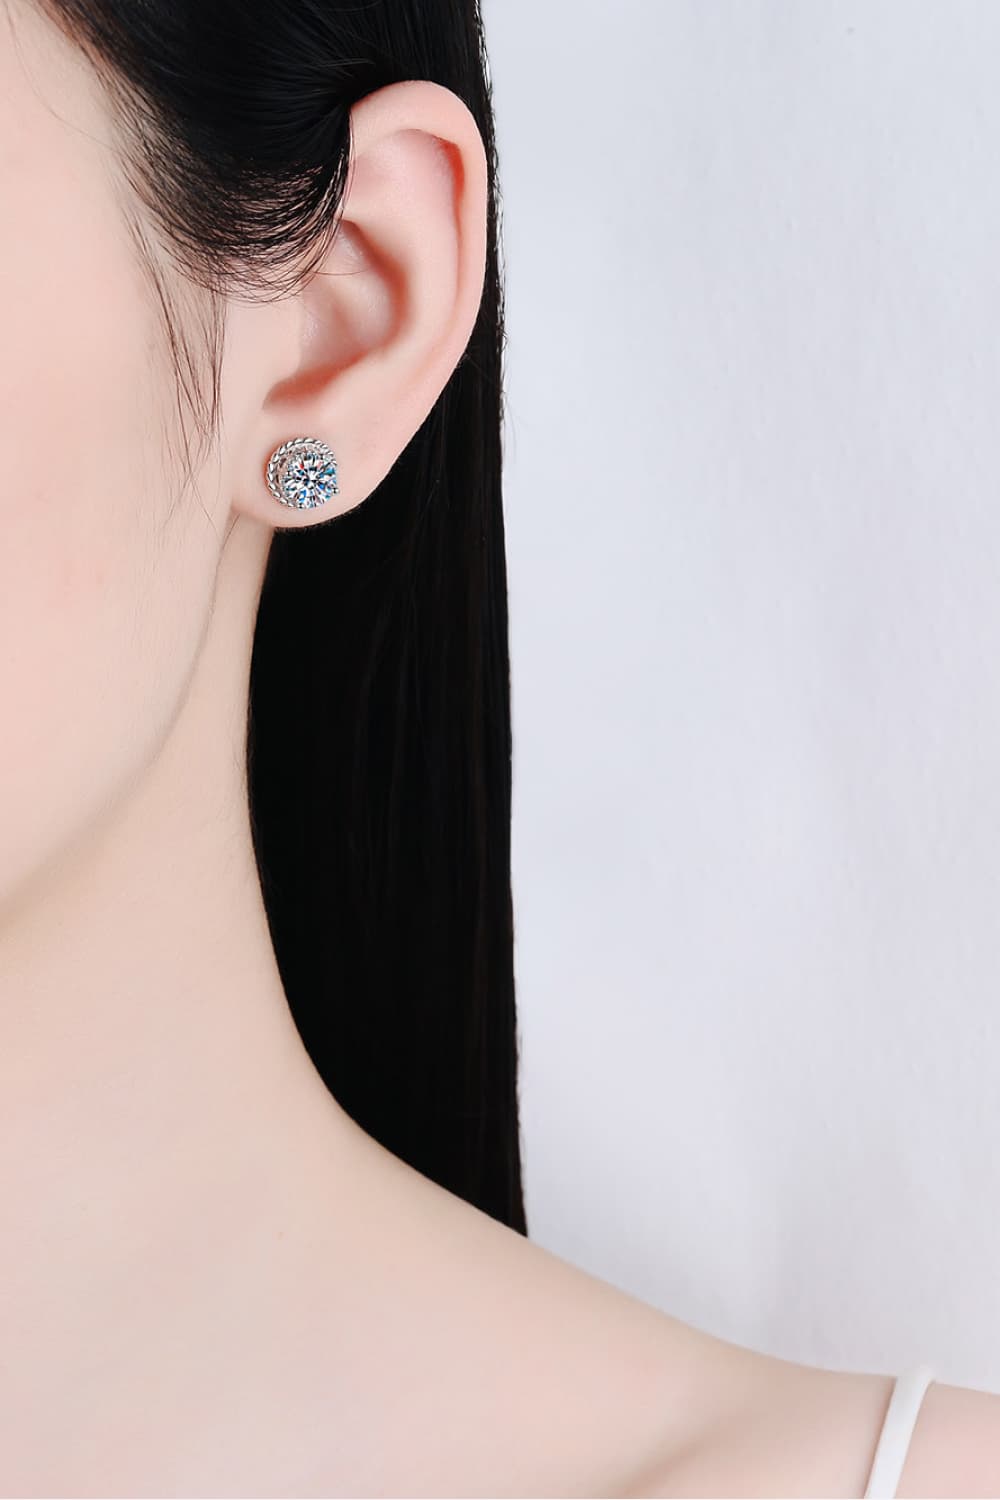 2 Carat Moissanite 925 Sterling Silver Stud Earrings - Earrings - FITGGINS